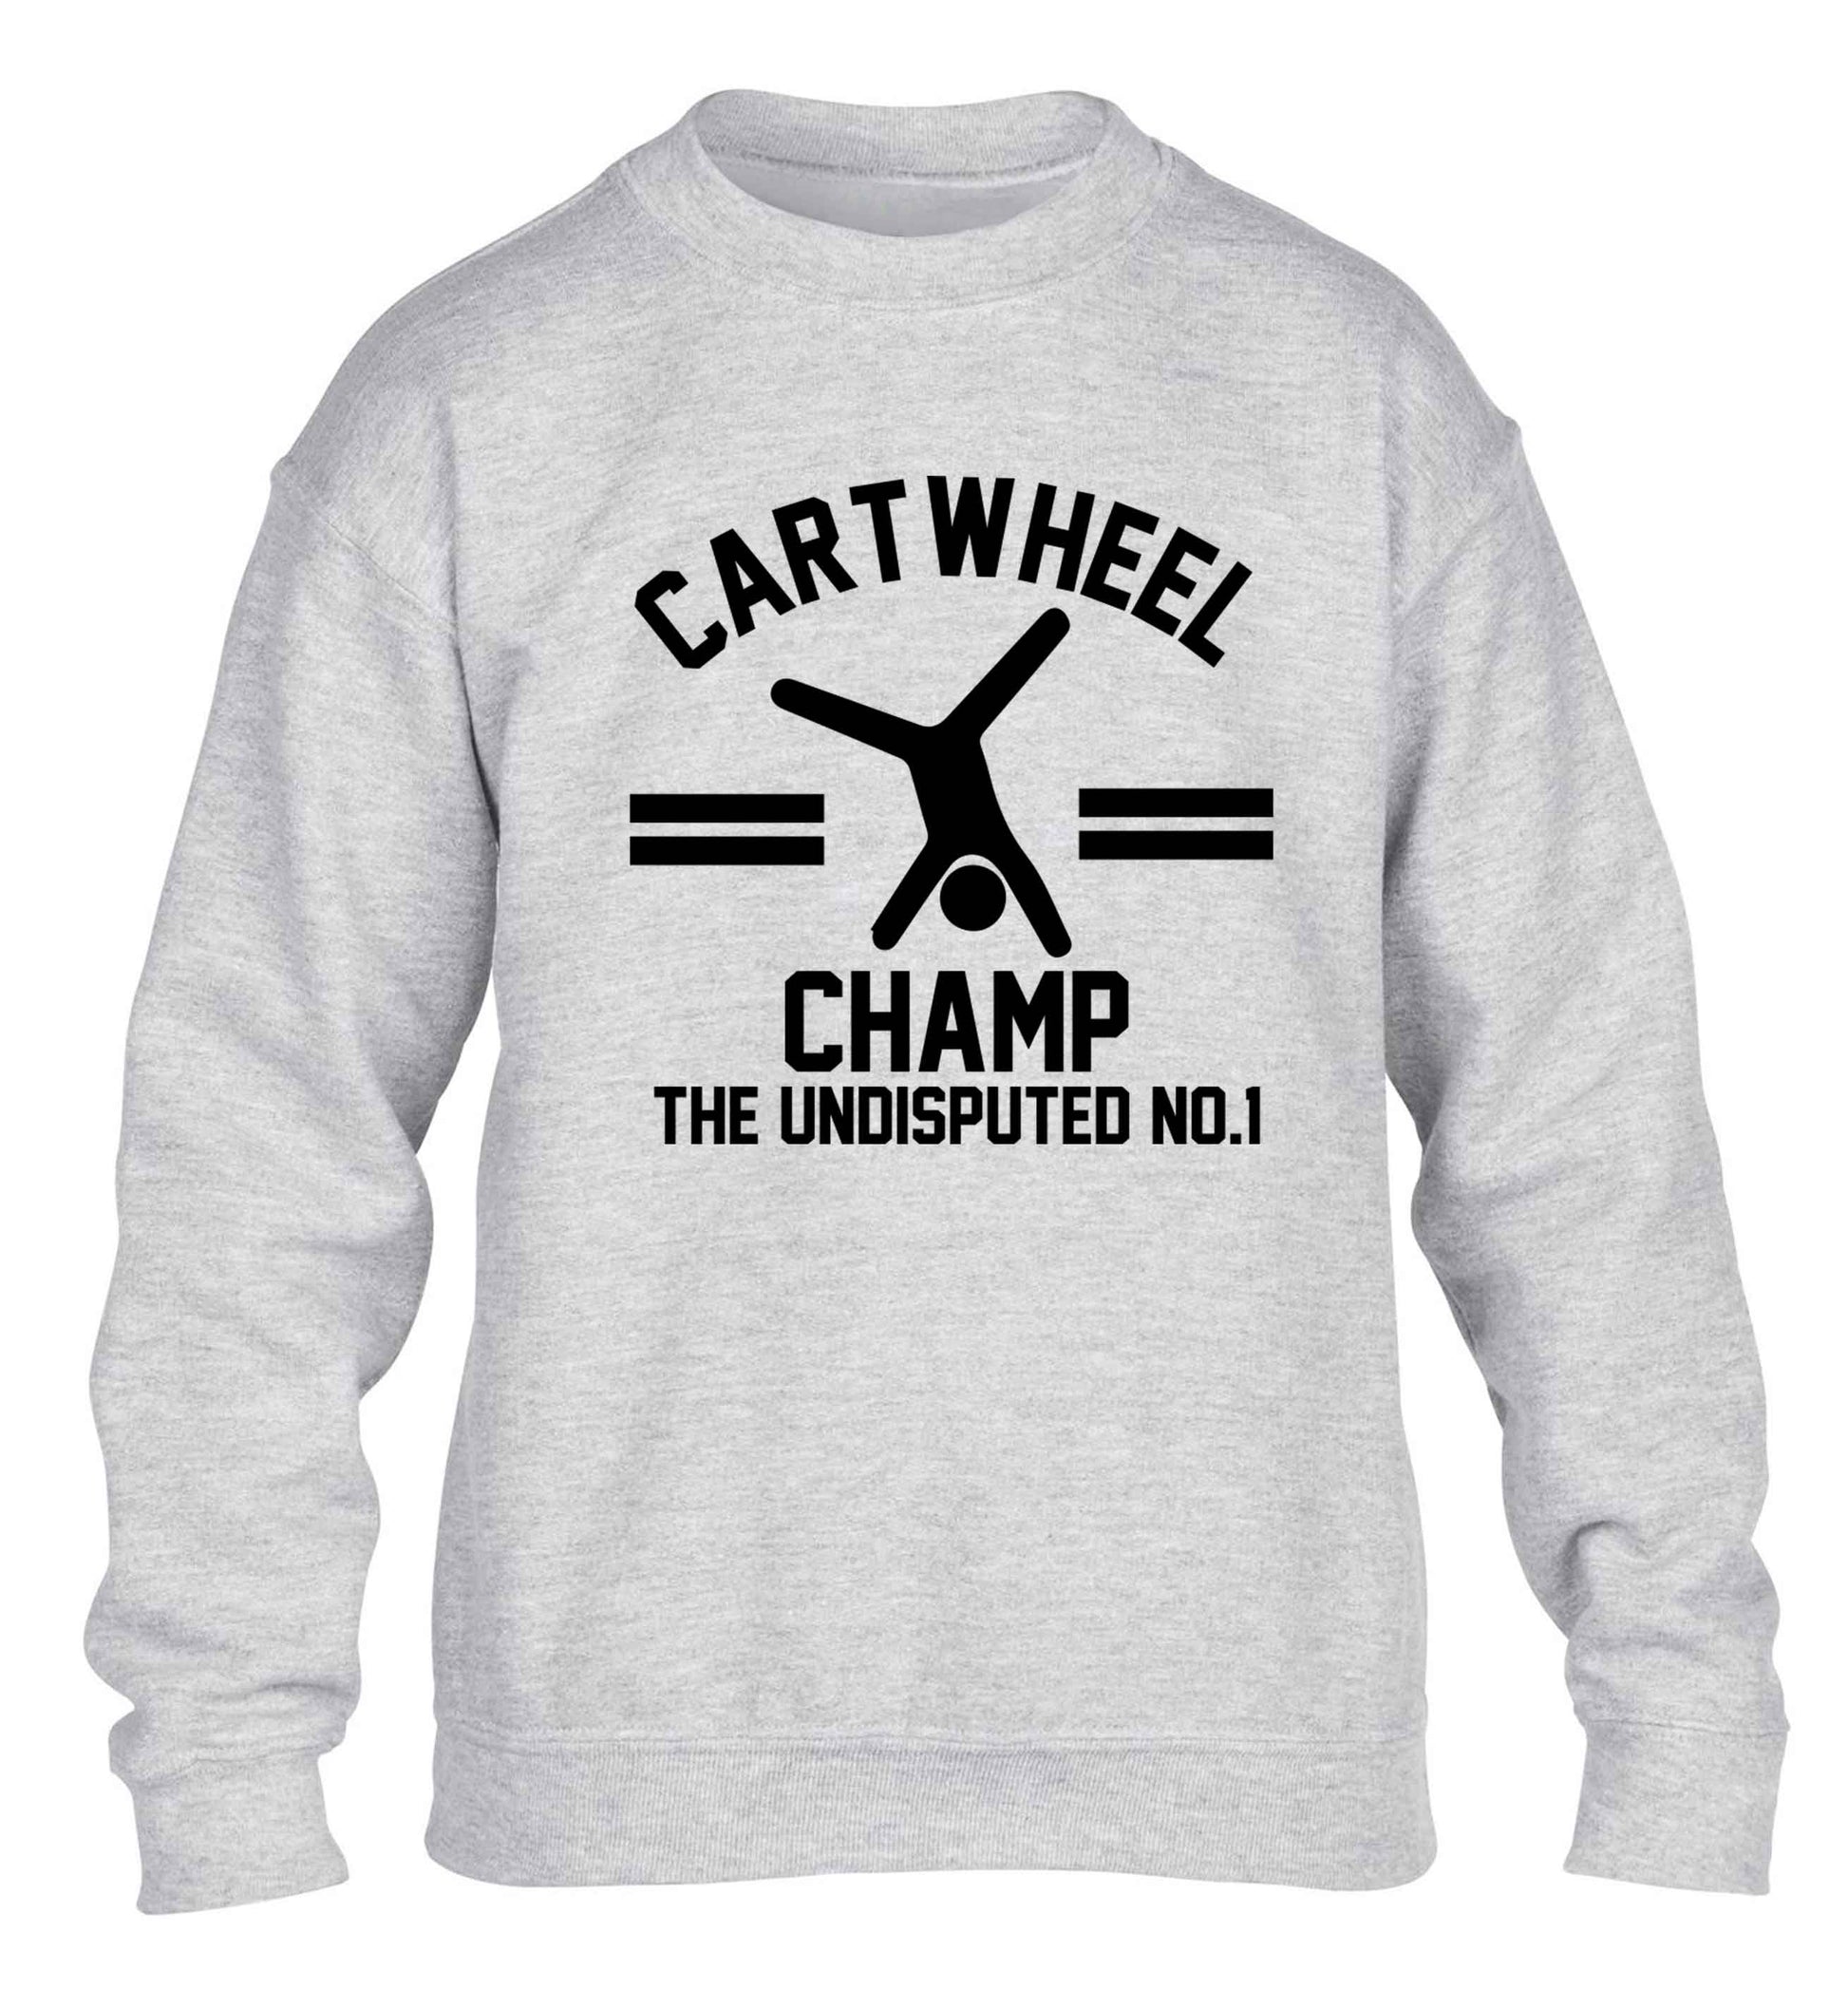 Undisputed cartwheel championship no.1  children's grey sweater 12-13 Years